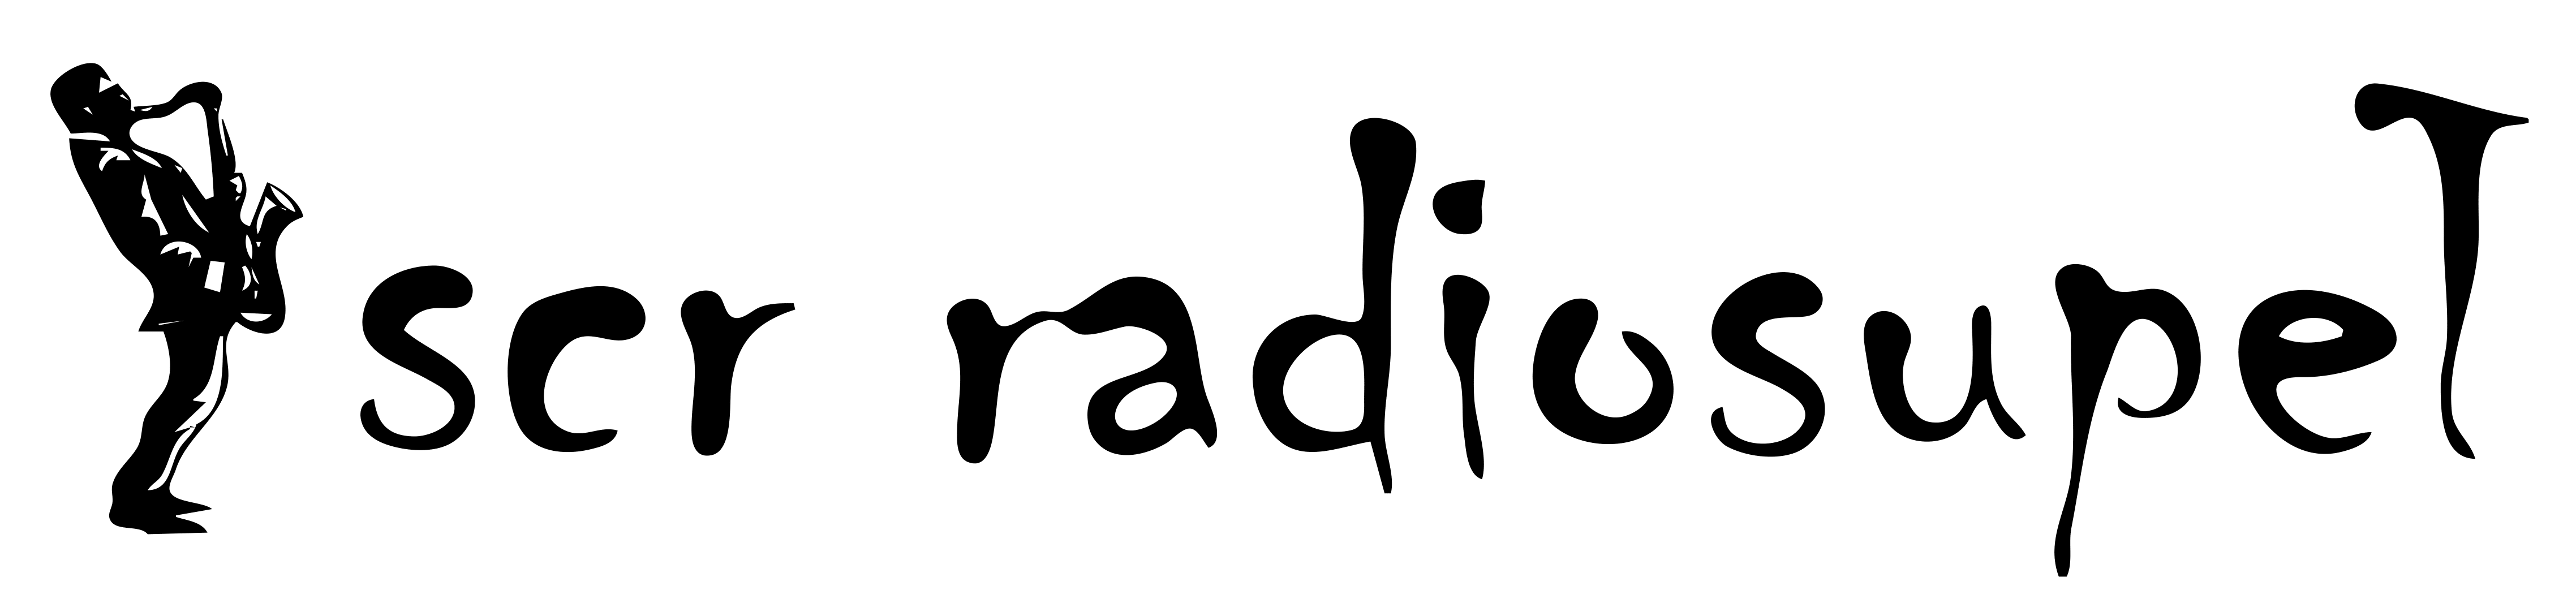 logotyp Studenckiego Centrum Radiowego Radiosupeł. Saksofonista i napis sce radiosupeł.